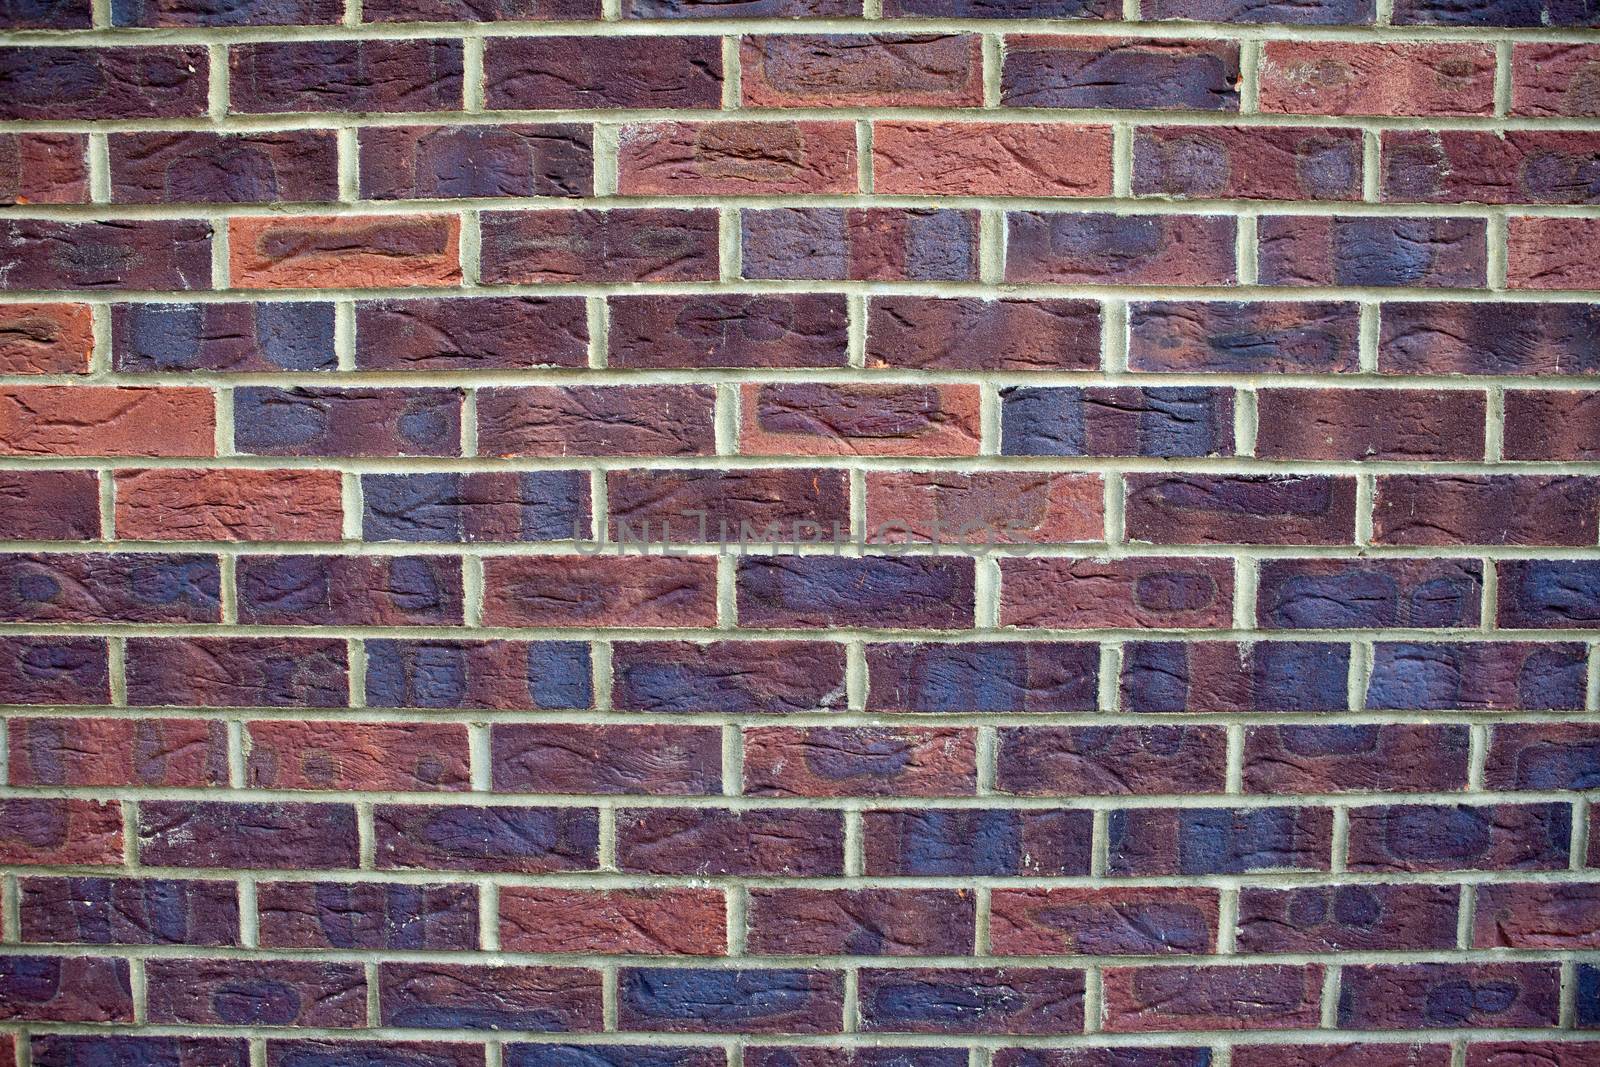 Brick Wall by chrisdorney